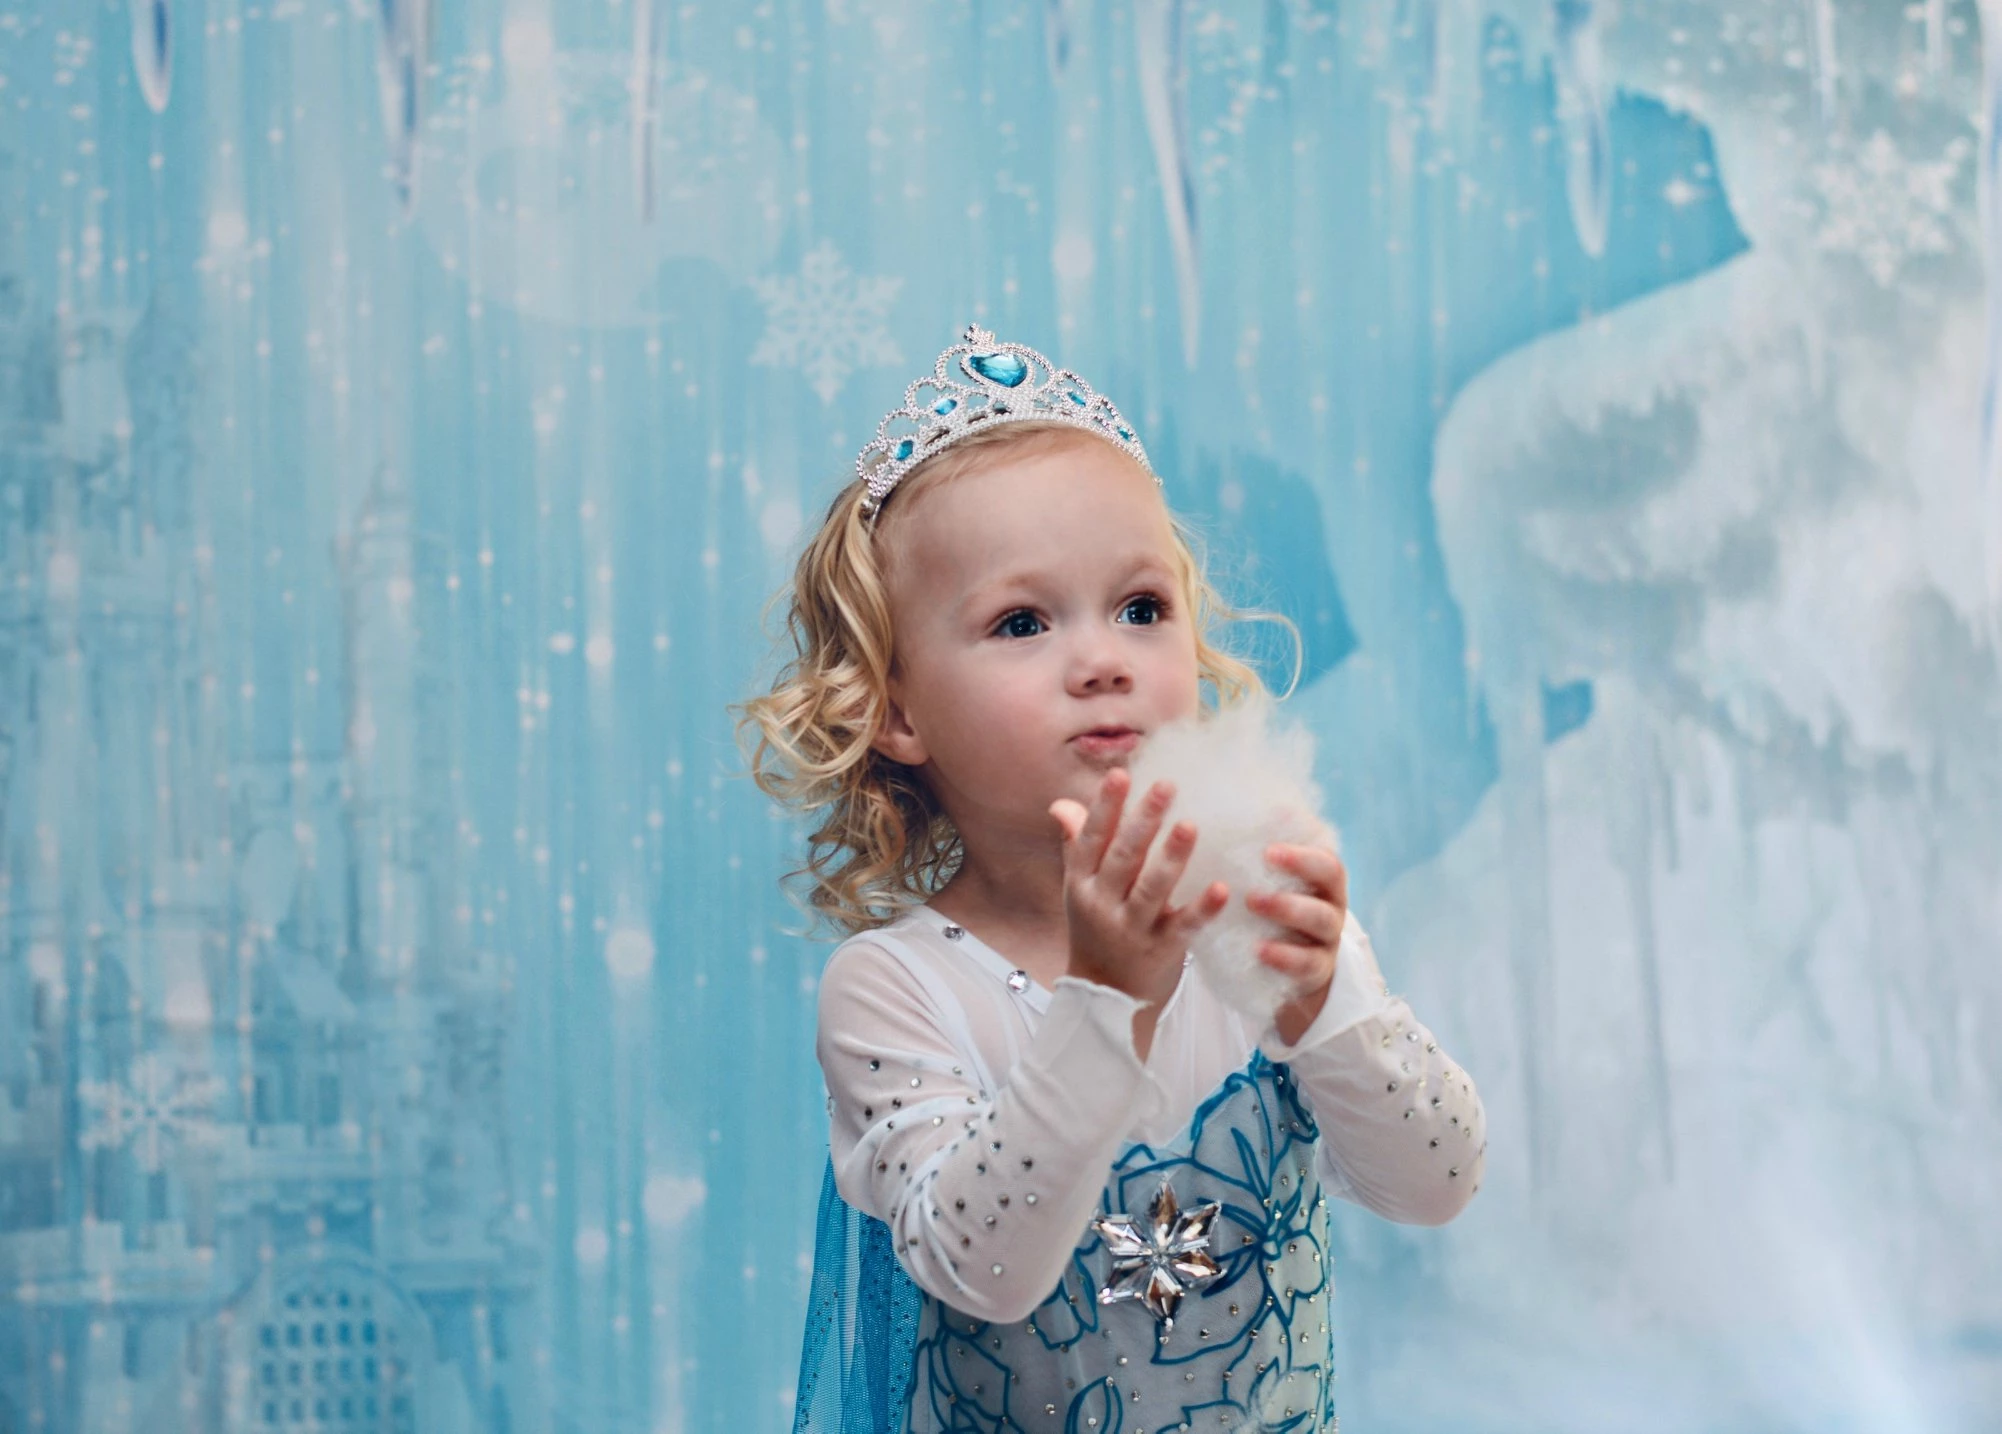 Kate Winter Ice Frozen Snow Castle/Christmas Backdrop Designed By Jerry_Sina